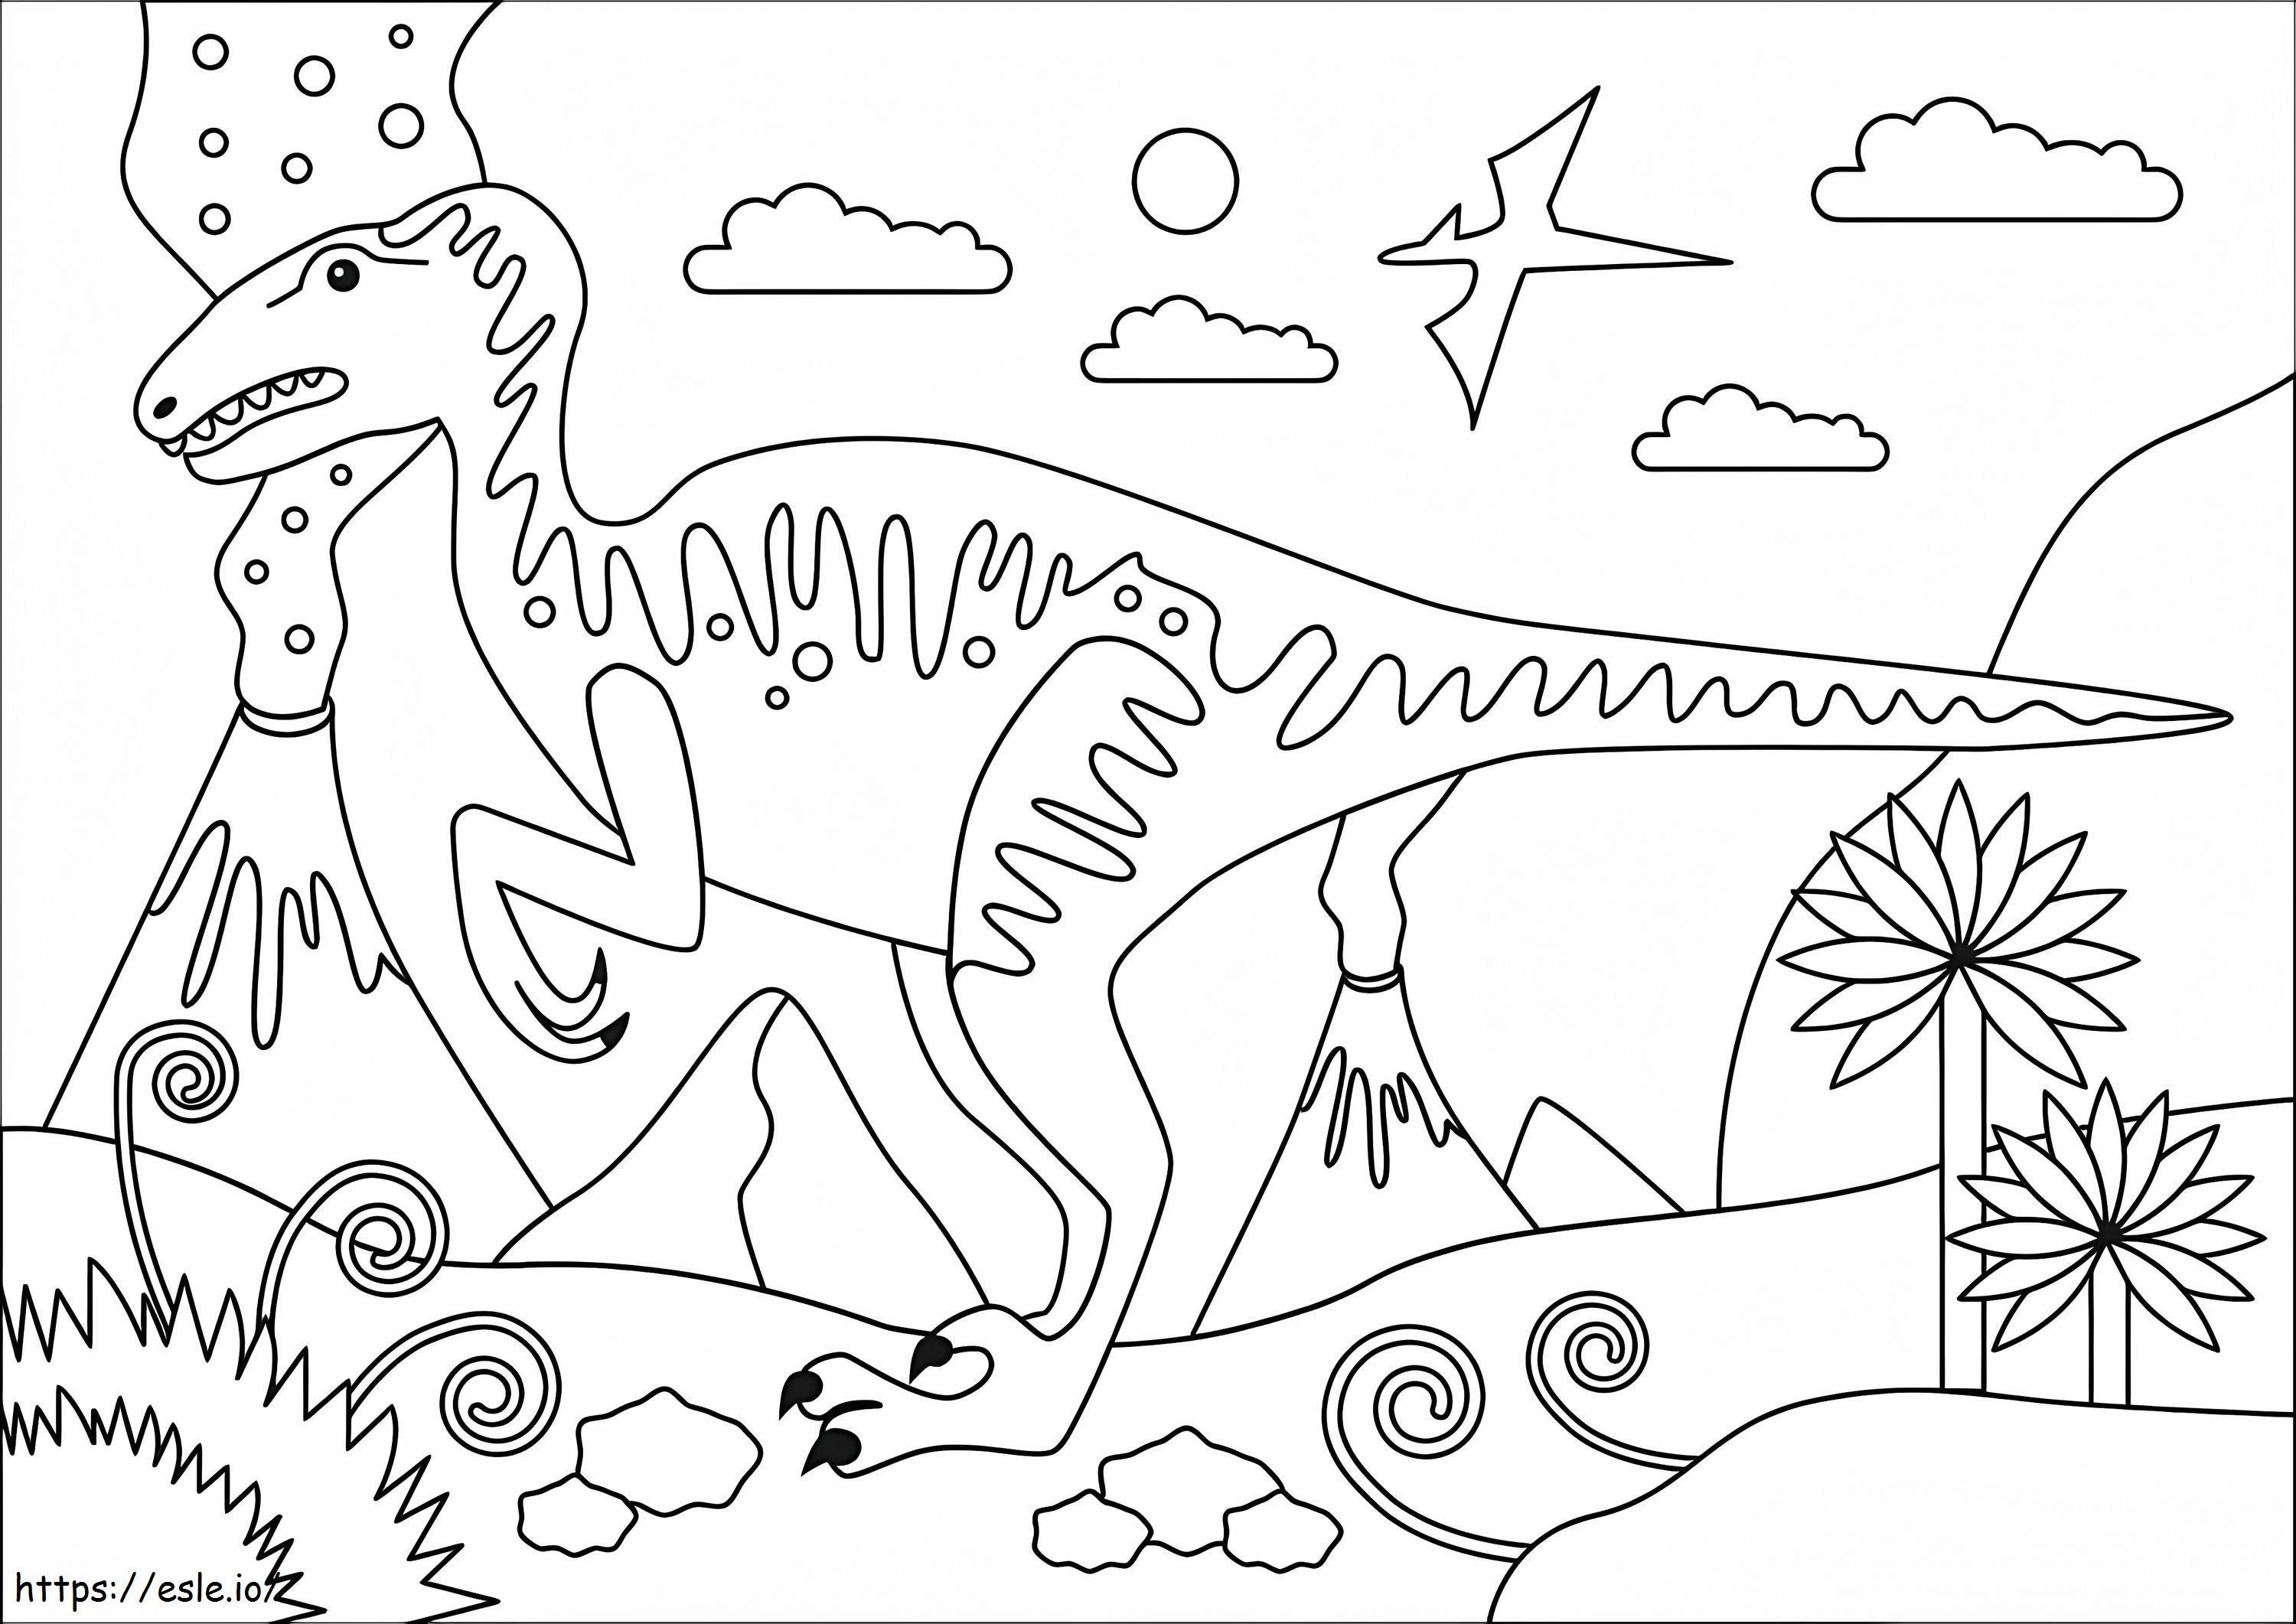 Velociraptor 2 coloring page